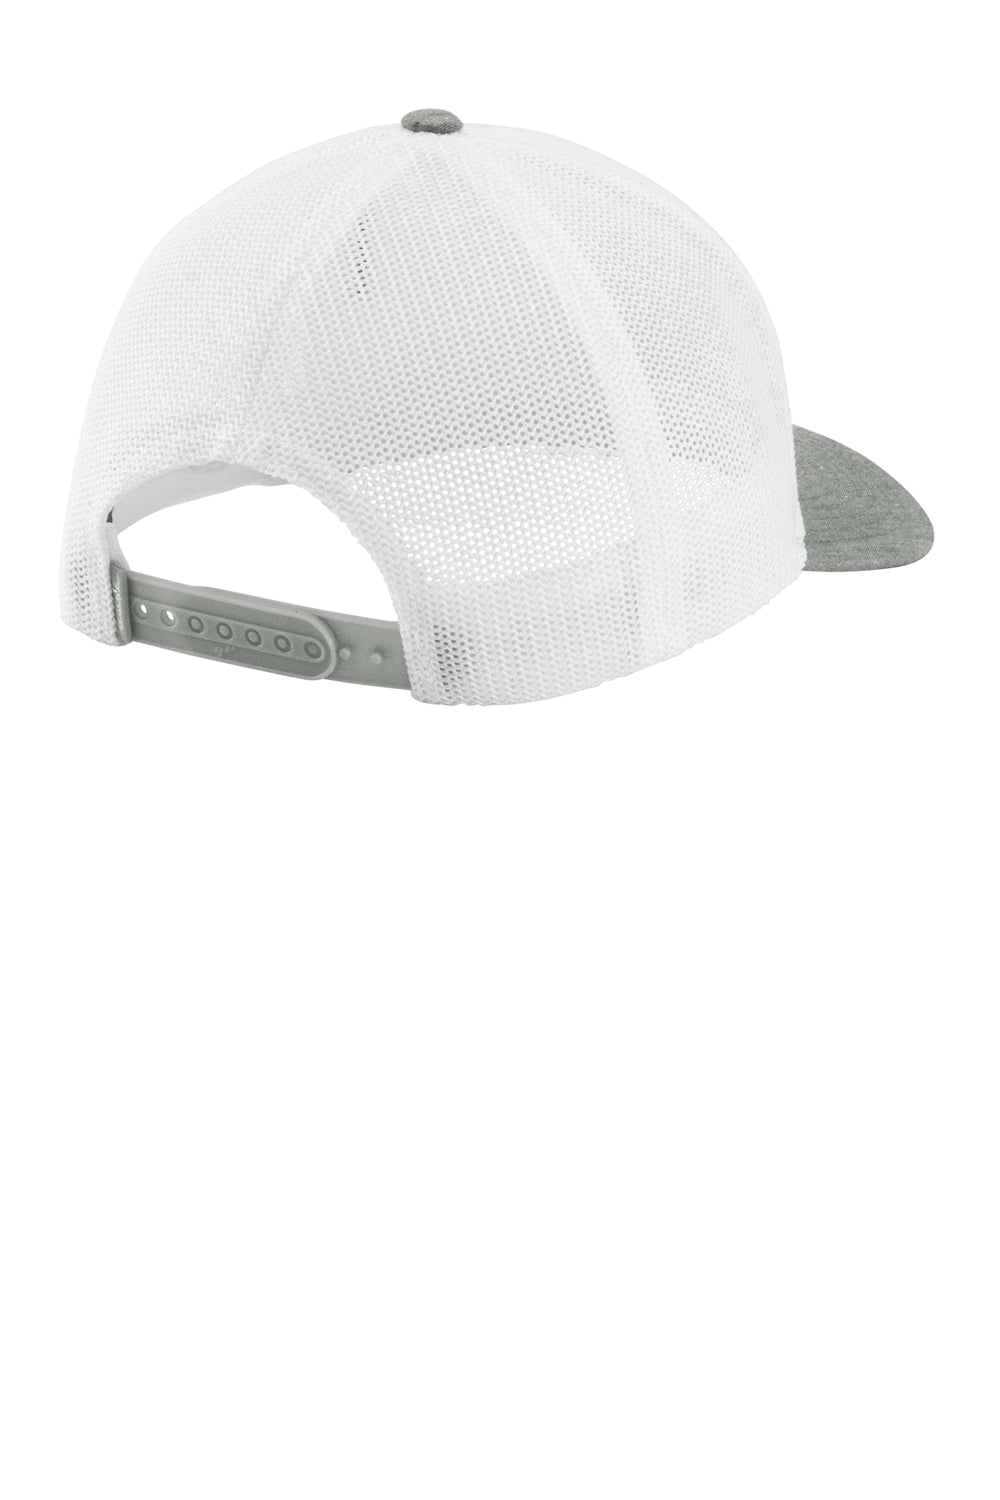 TravisMathew TM1MY390  Cruz Colorblock Adjustable Trucker Hat White/Heather Grey Flat Back